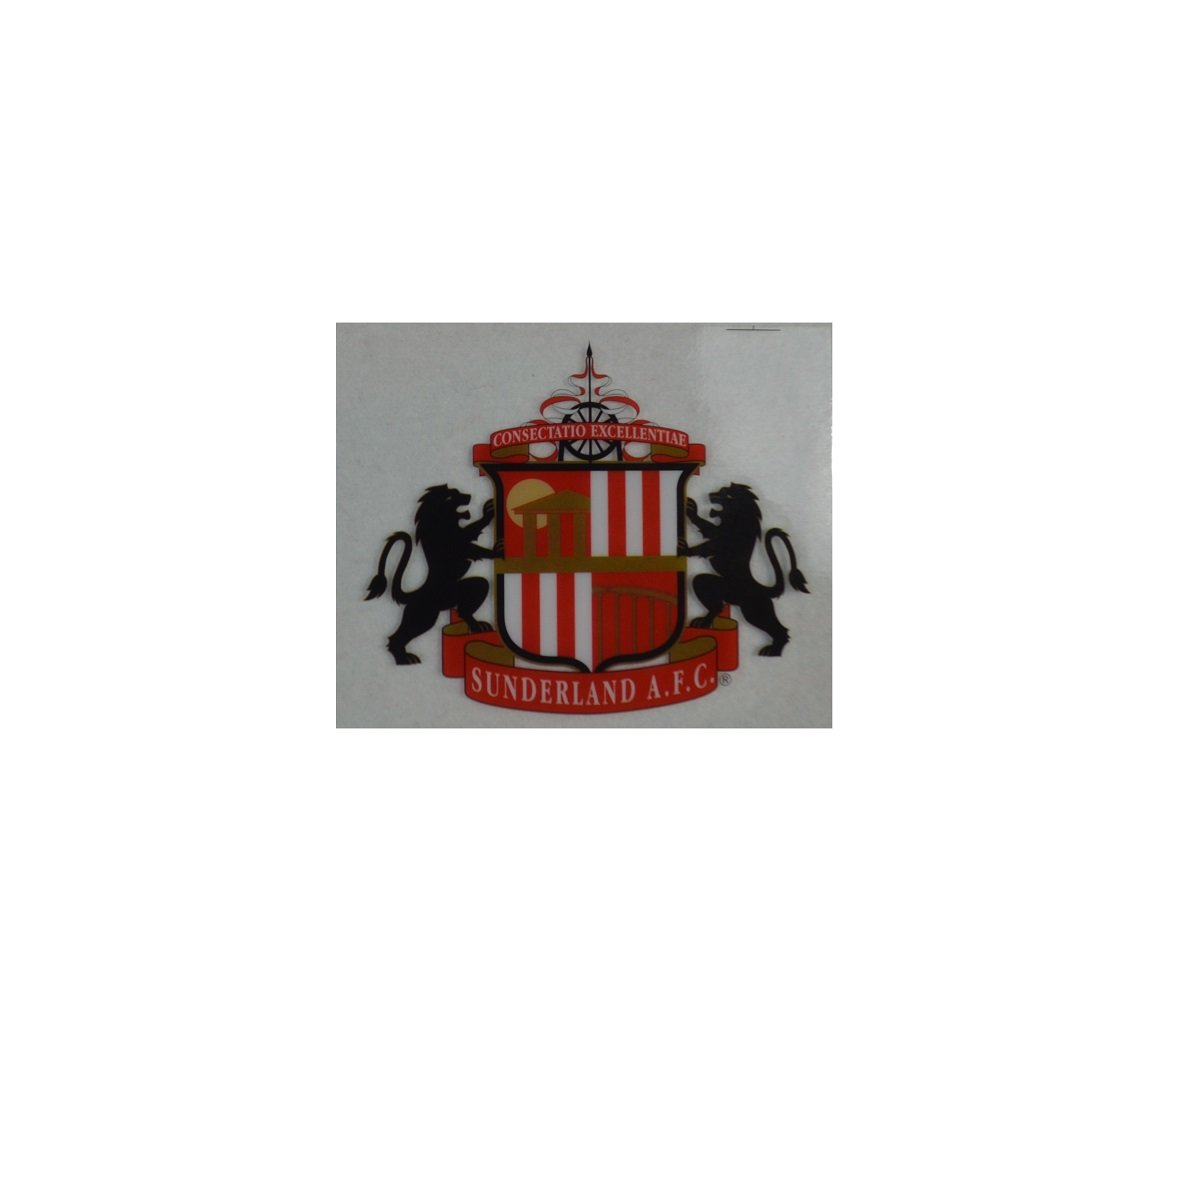 Buy the SAFC CREST STICKER online at Sunderland AFC Store